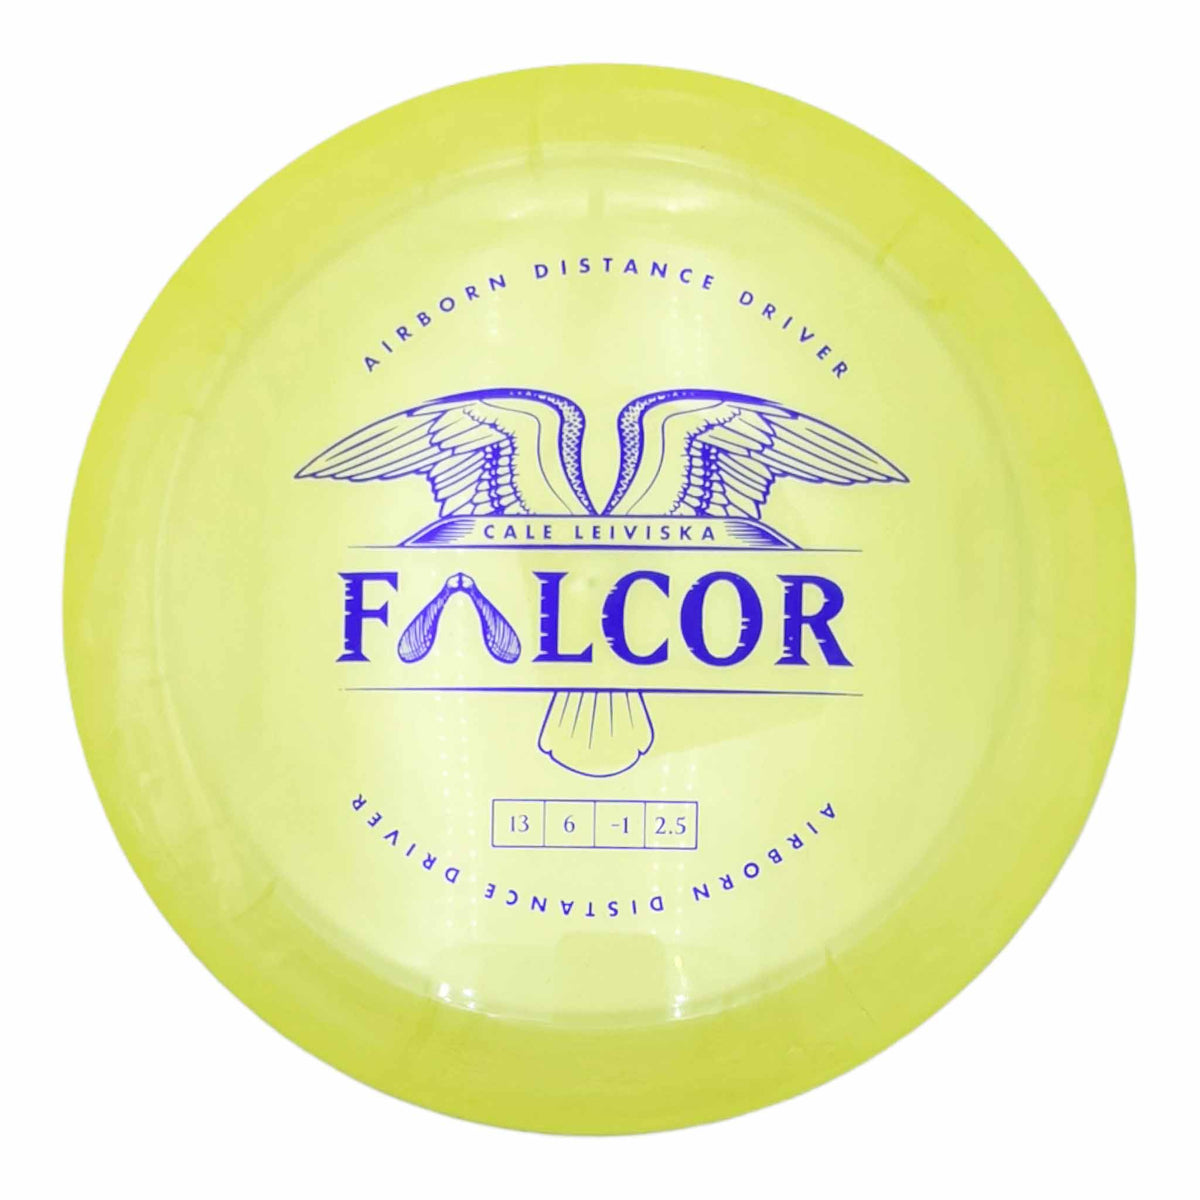 Prodigy 500 Airborn Falcor distance driver - Yellow / Purple